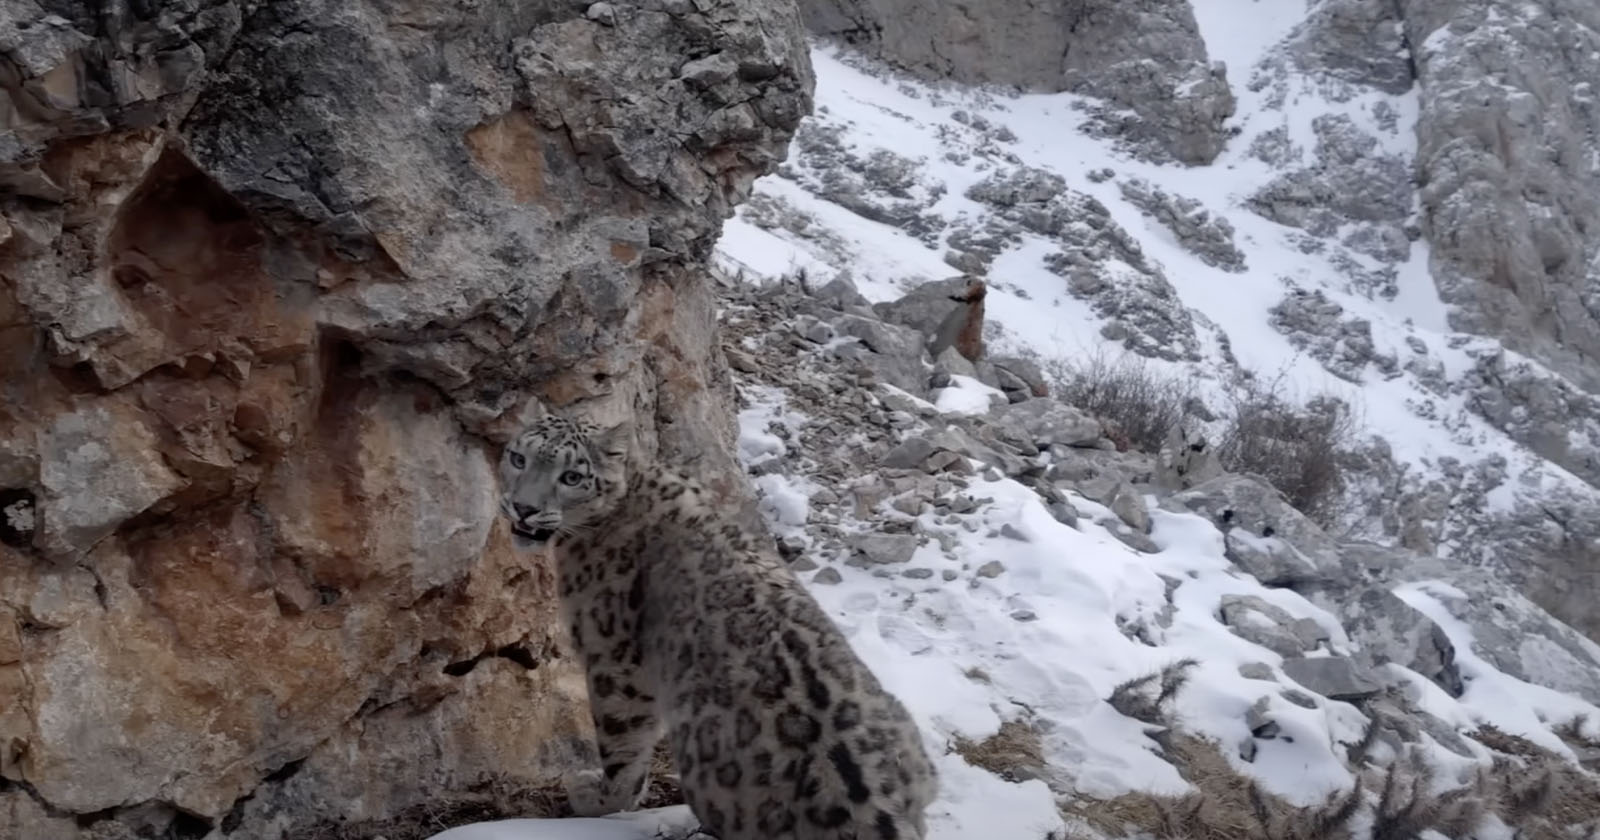 A snow leopard prowling along a craggy ridge, its grey coat blending into  the rocky terrain